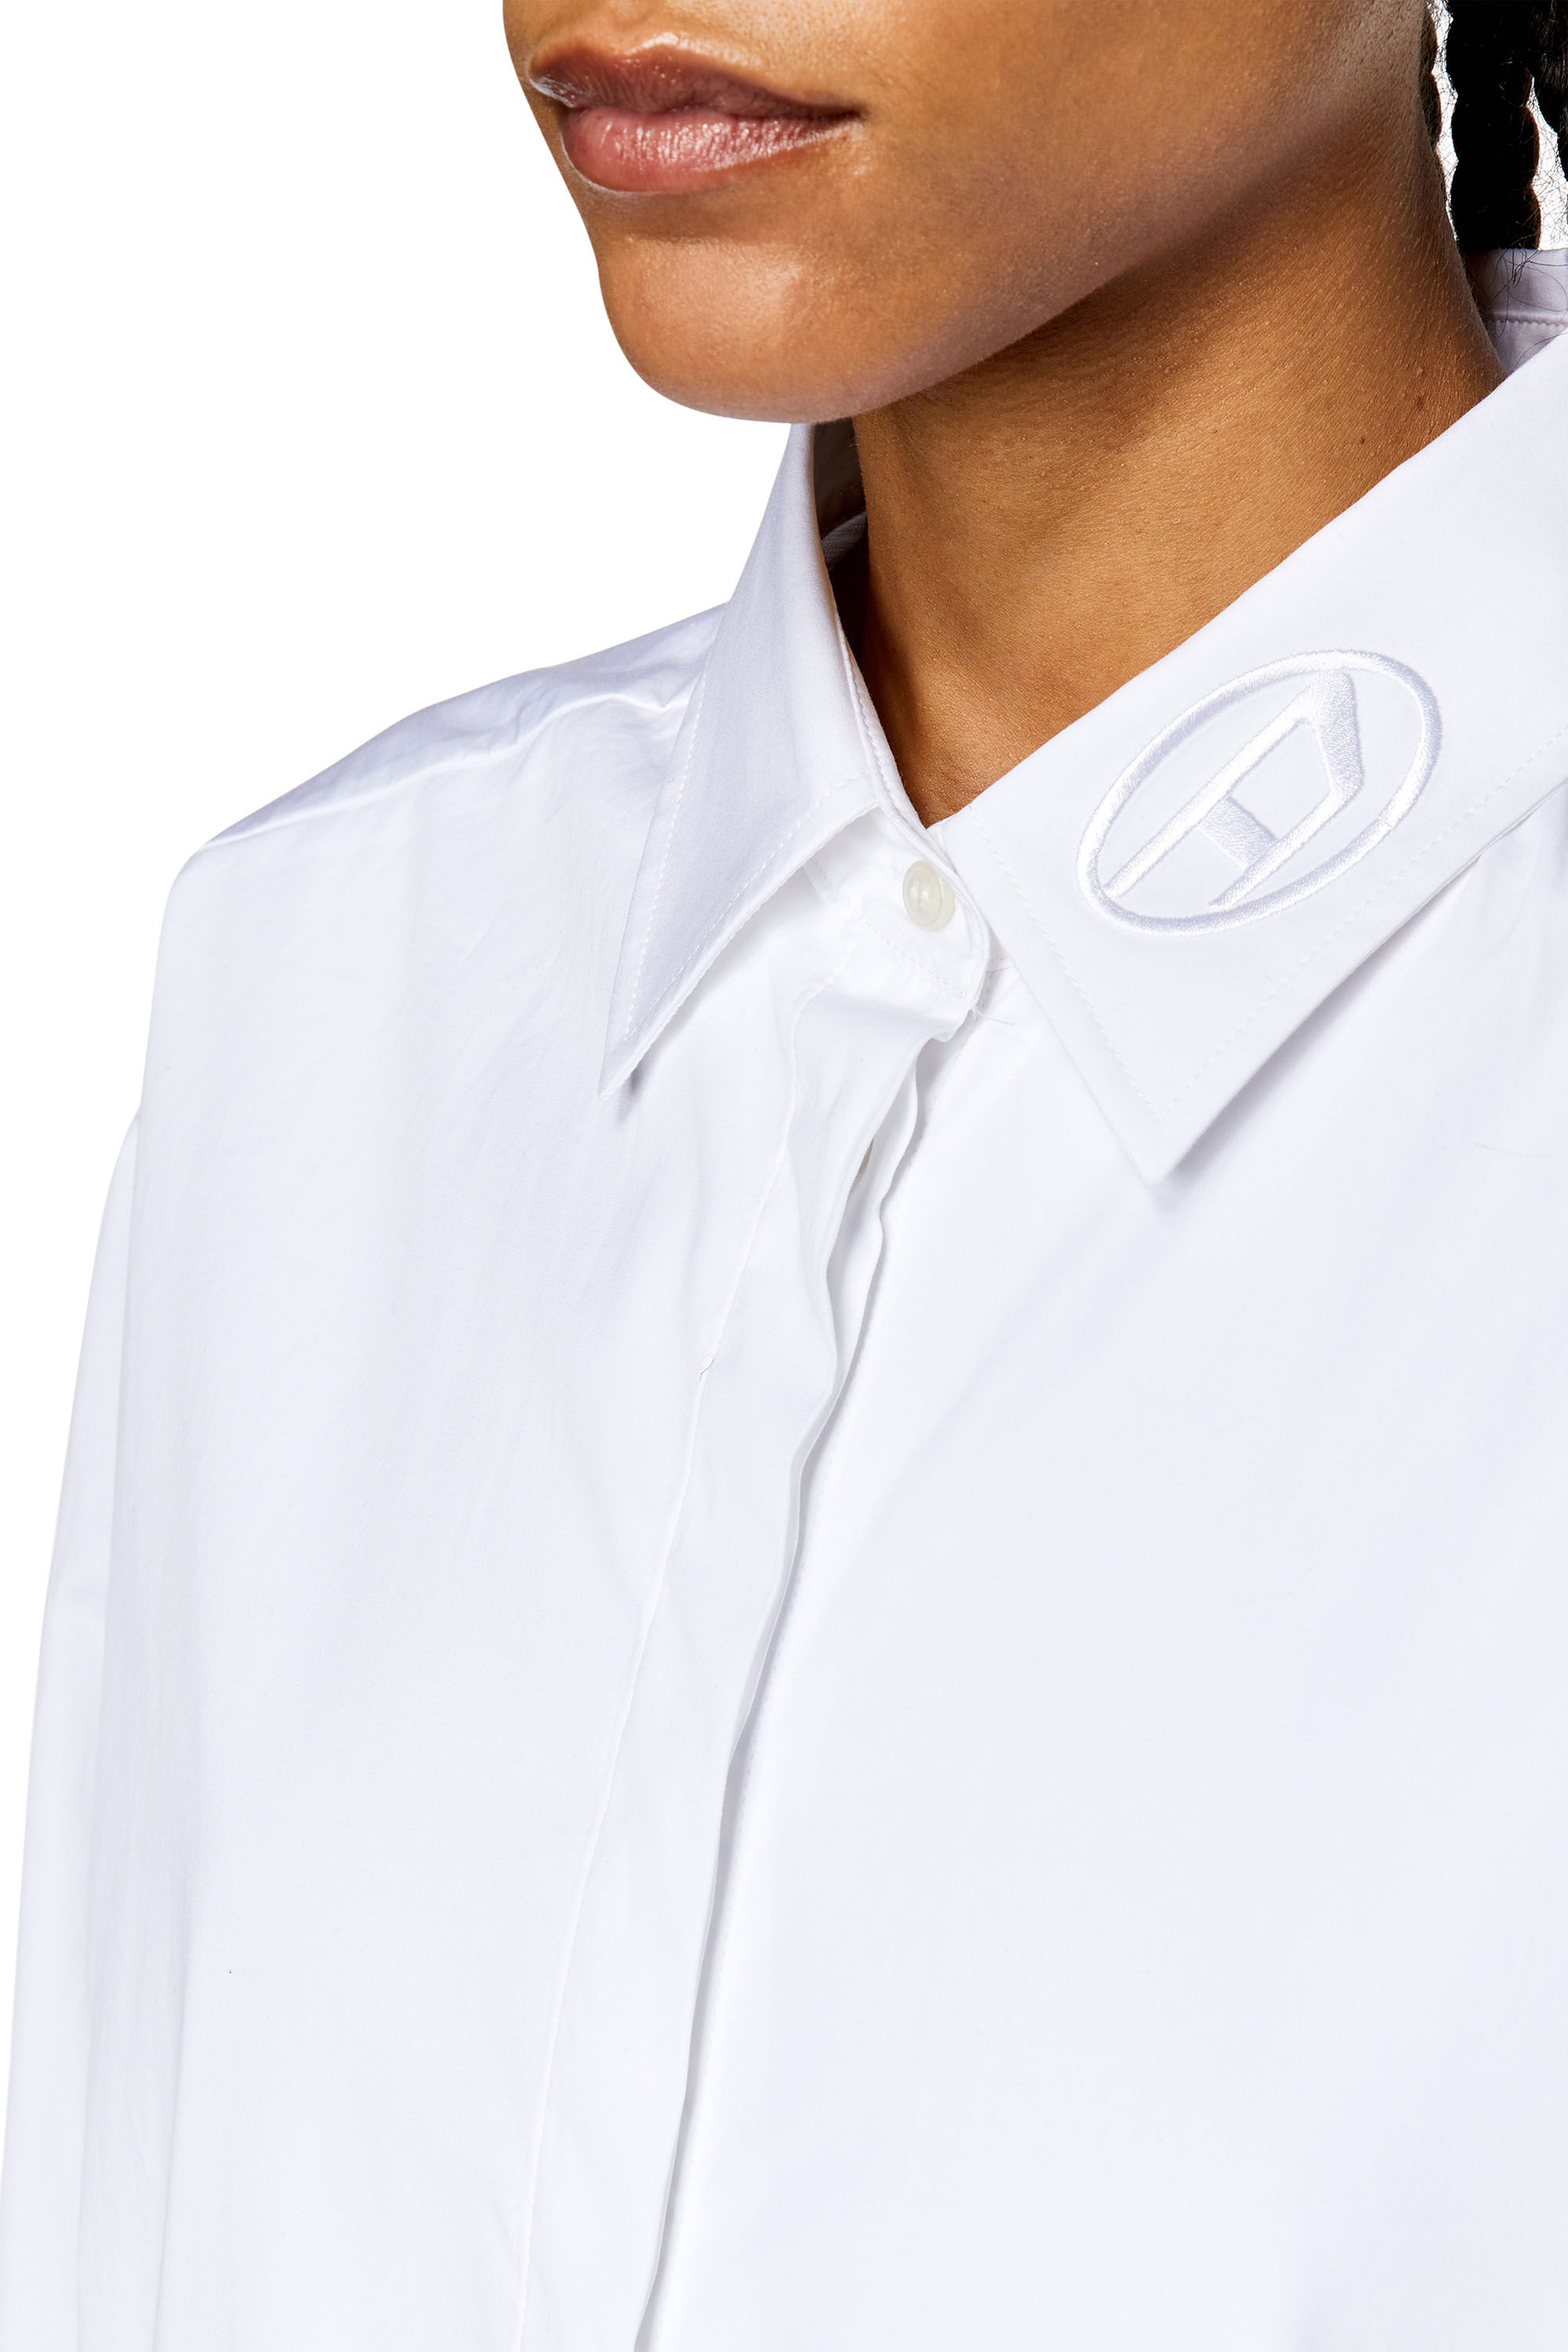 Christian Dior D Uniform Womens long sleeve top blouse size 12